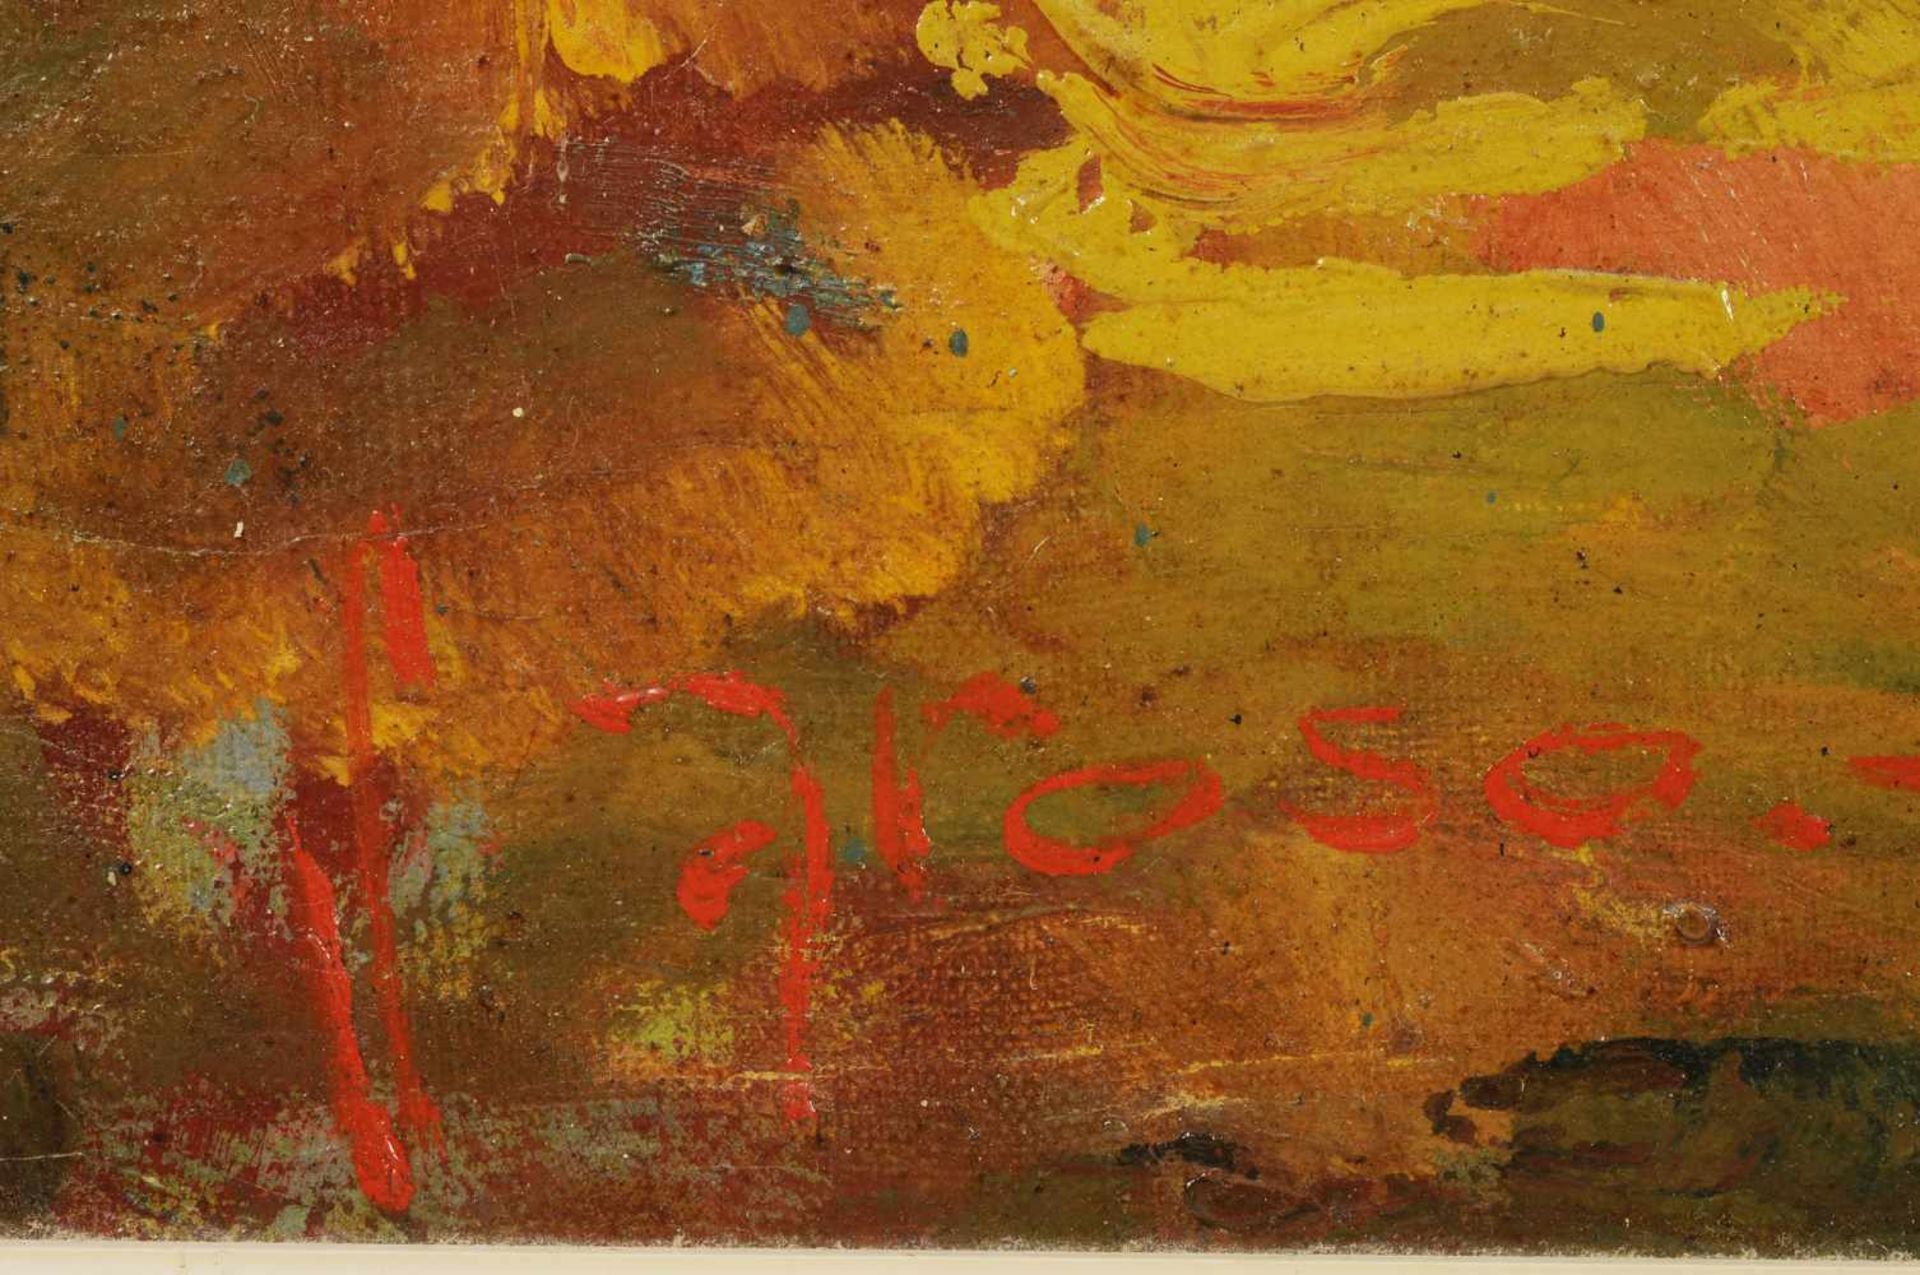 Saroso, 'Dancer', signed lower left, canvas. 115 x 77 cm. Provenance: Christies Amsterdam 19-10-'94, - Image 3 of 4